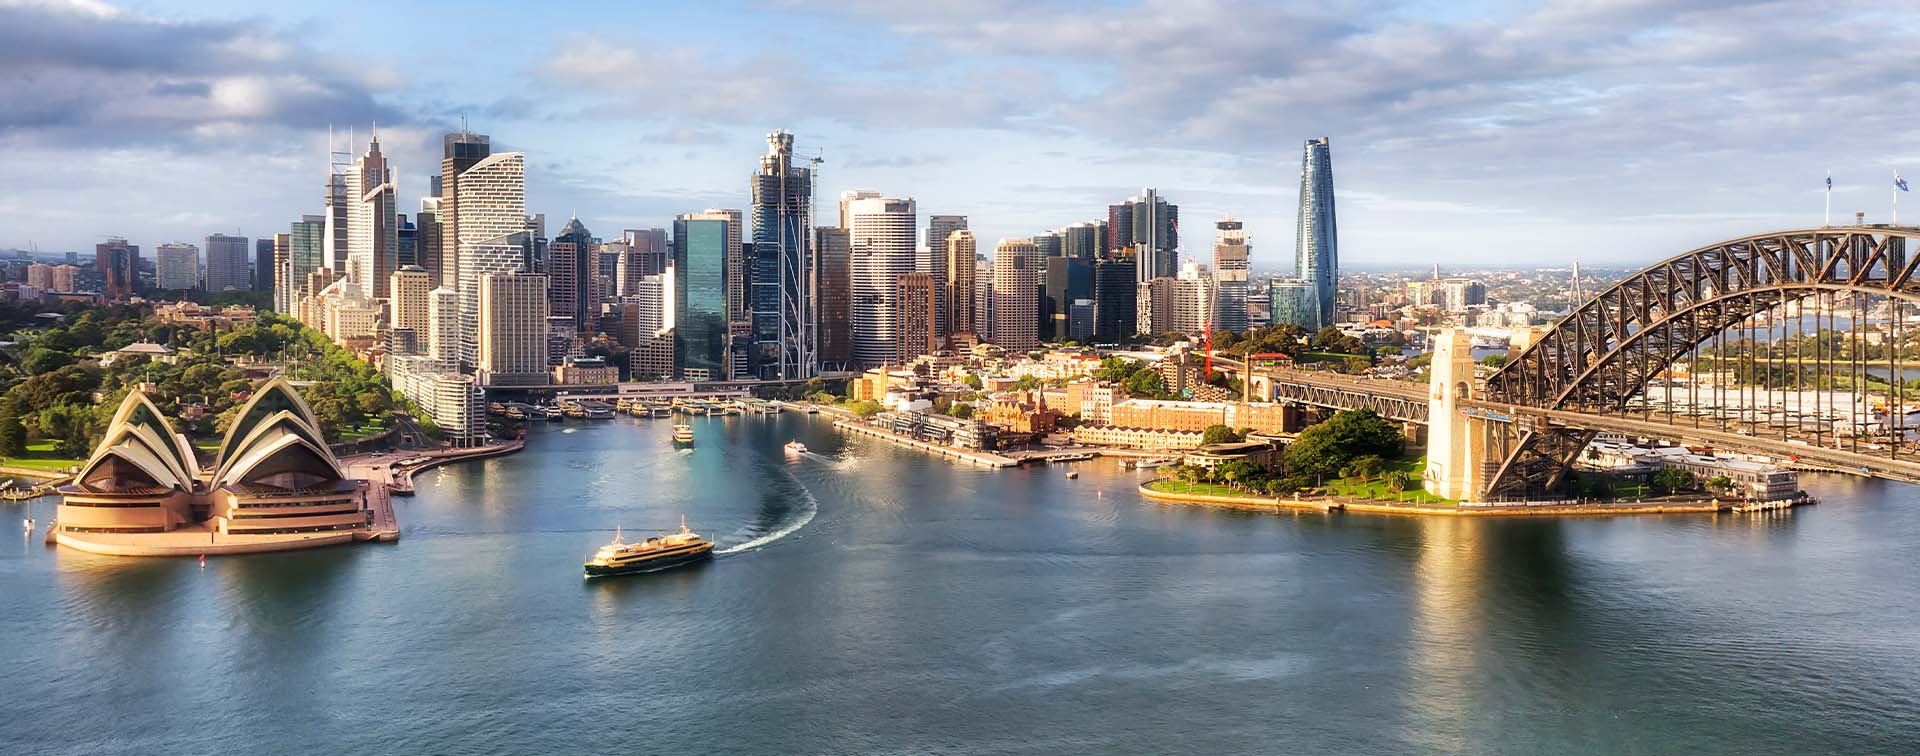 Skyline of Sydney, Australia including the Opera house